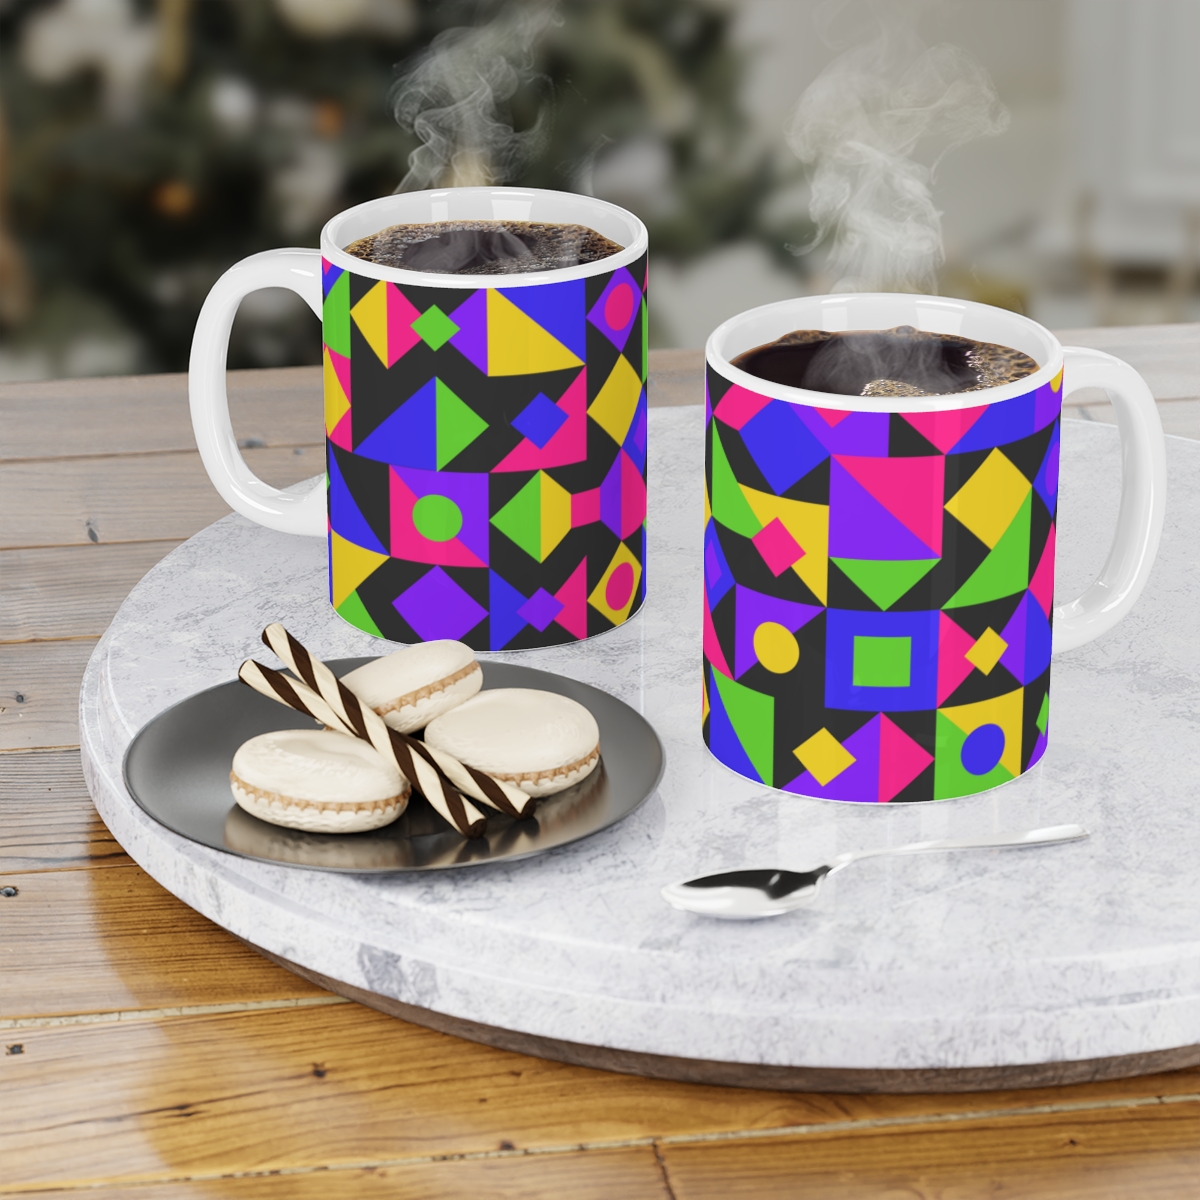 enjoy-your-favorite-drink-in-style-with-our-ceramic-mug-ceramic-mugs-11o (2).jpg